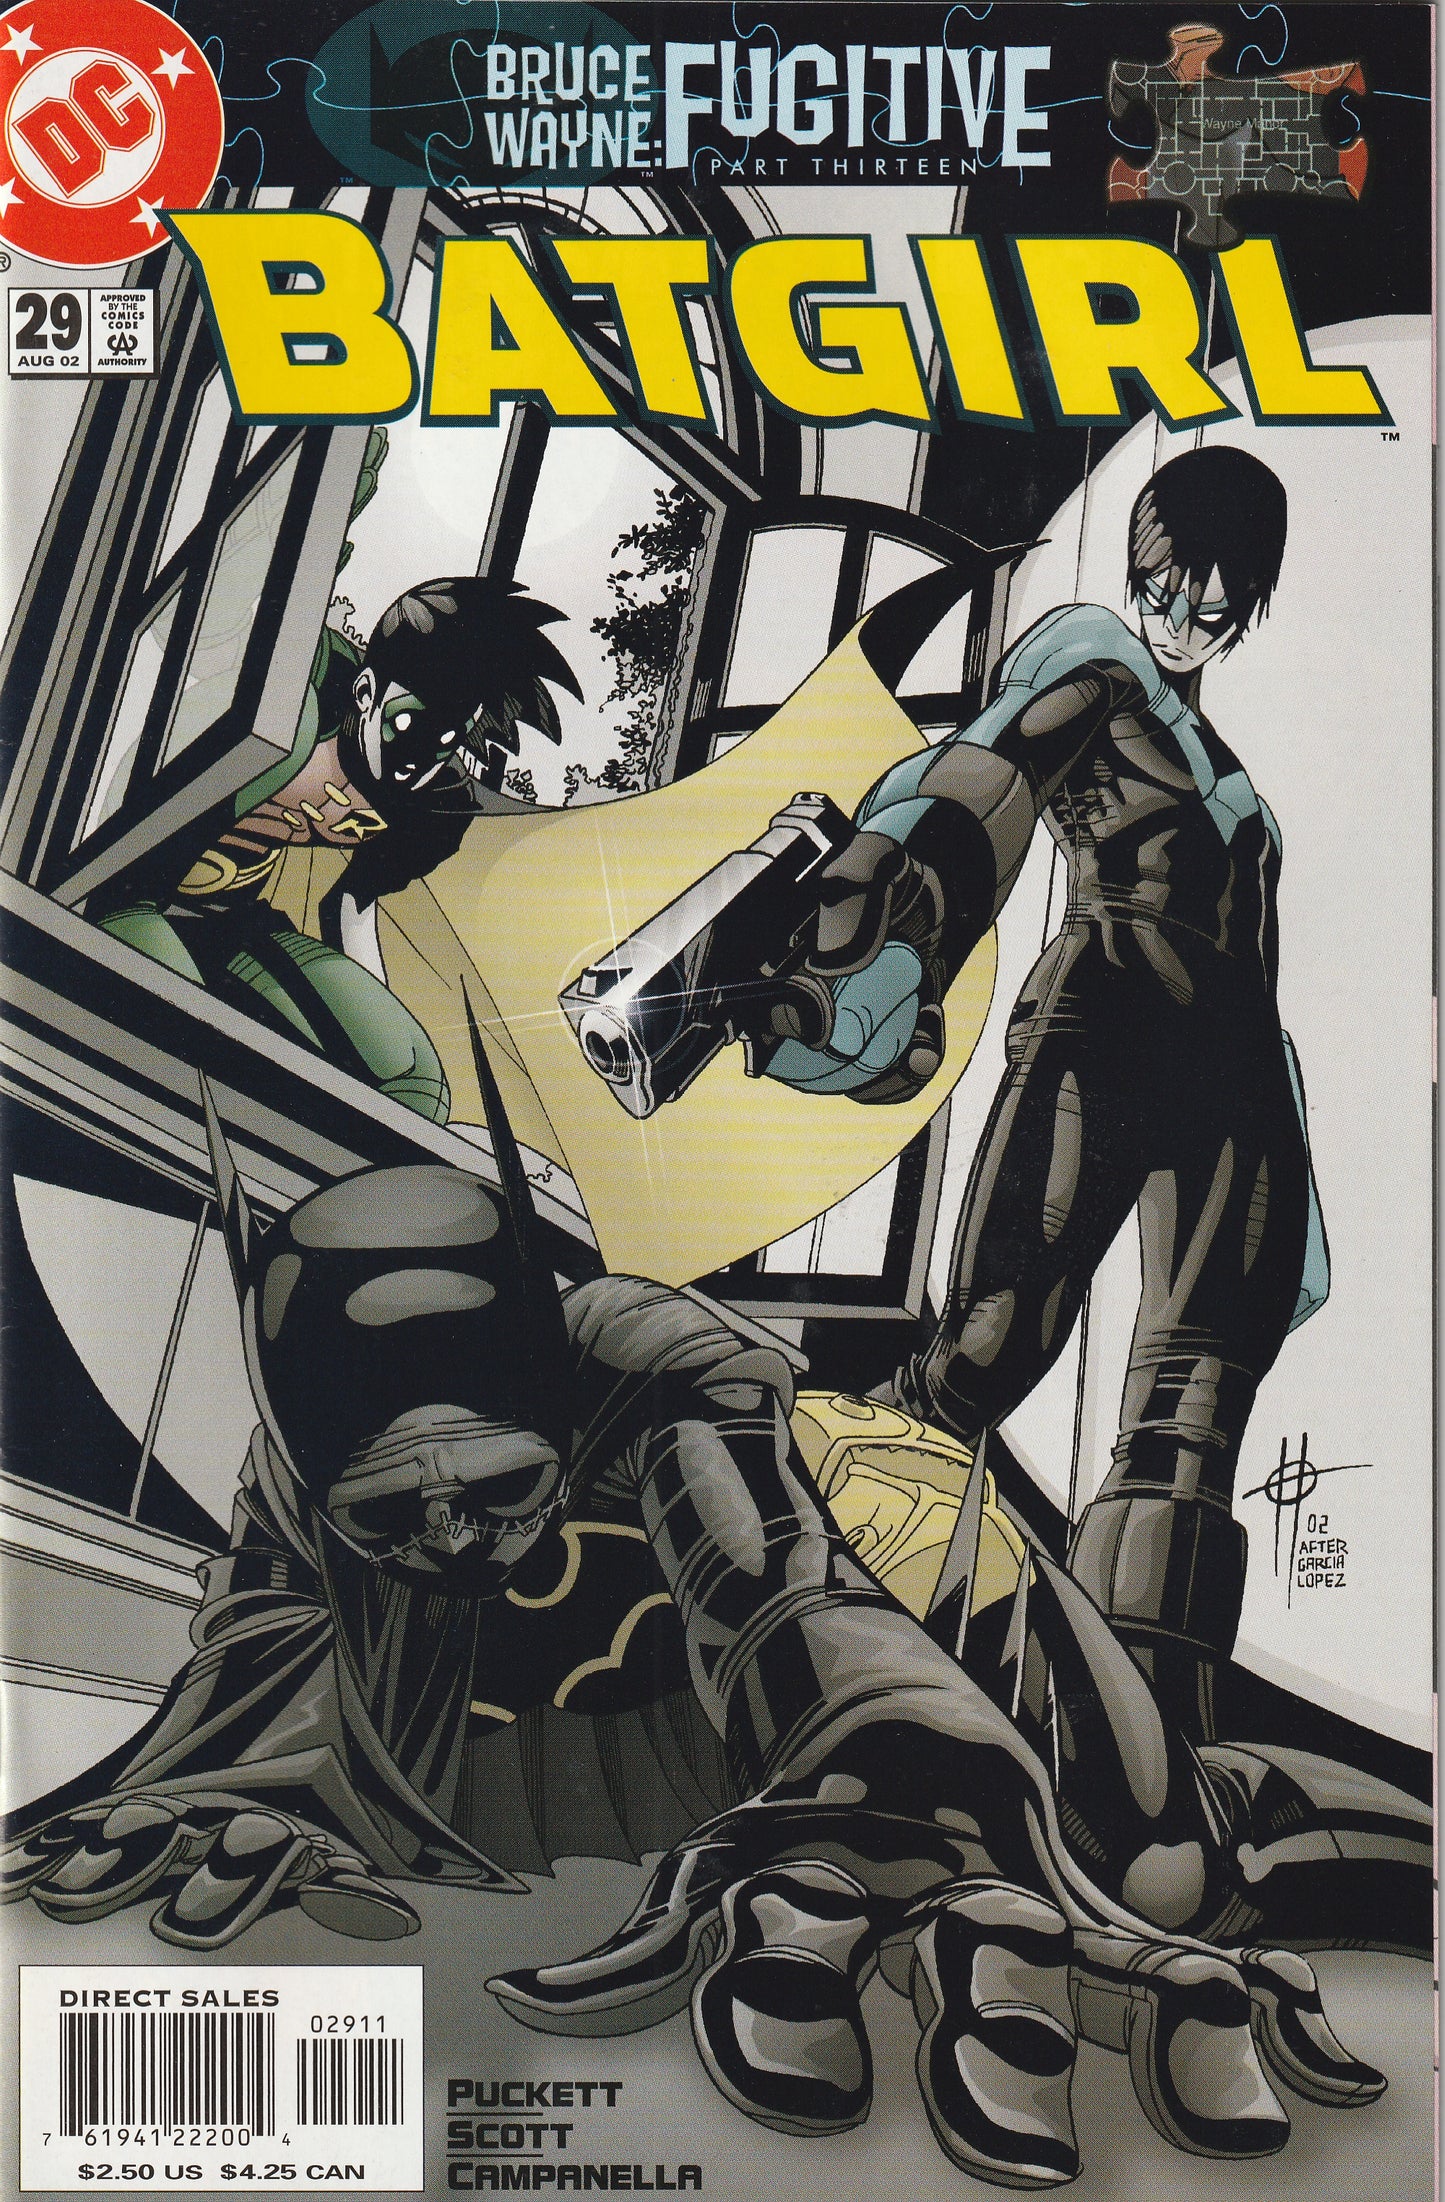 Batgirl #29 (Vol 1, 2002) - Bruce Wayne Fugitive tie-in